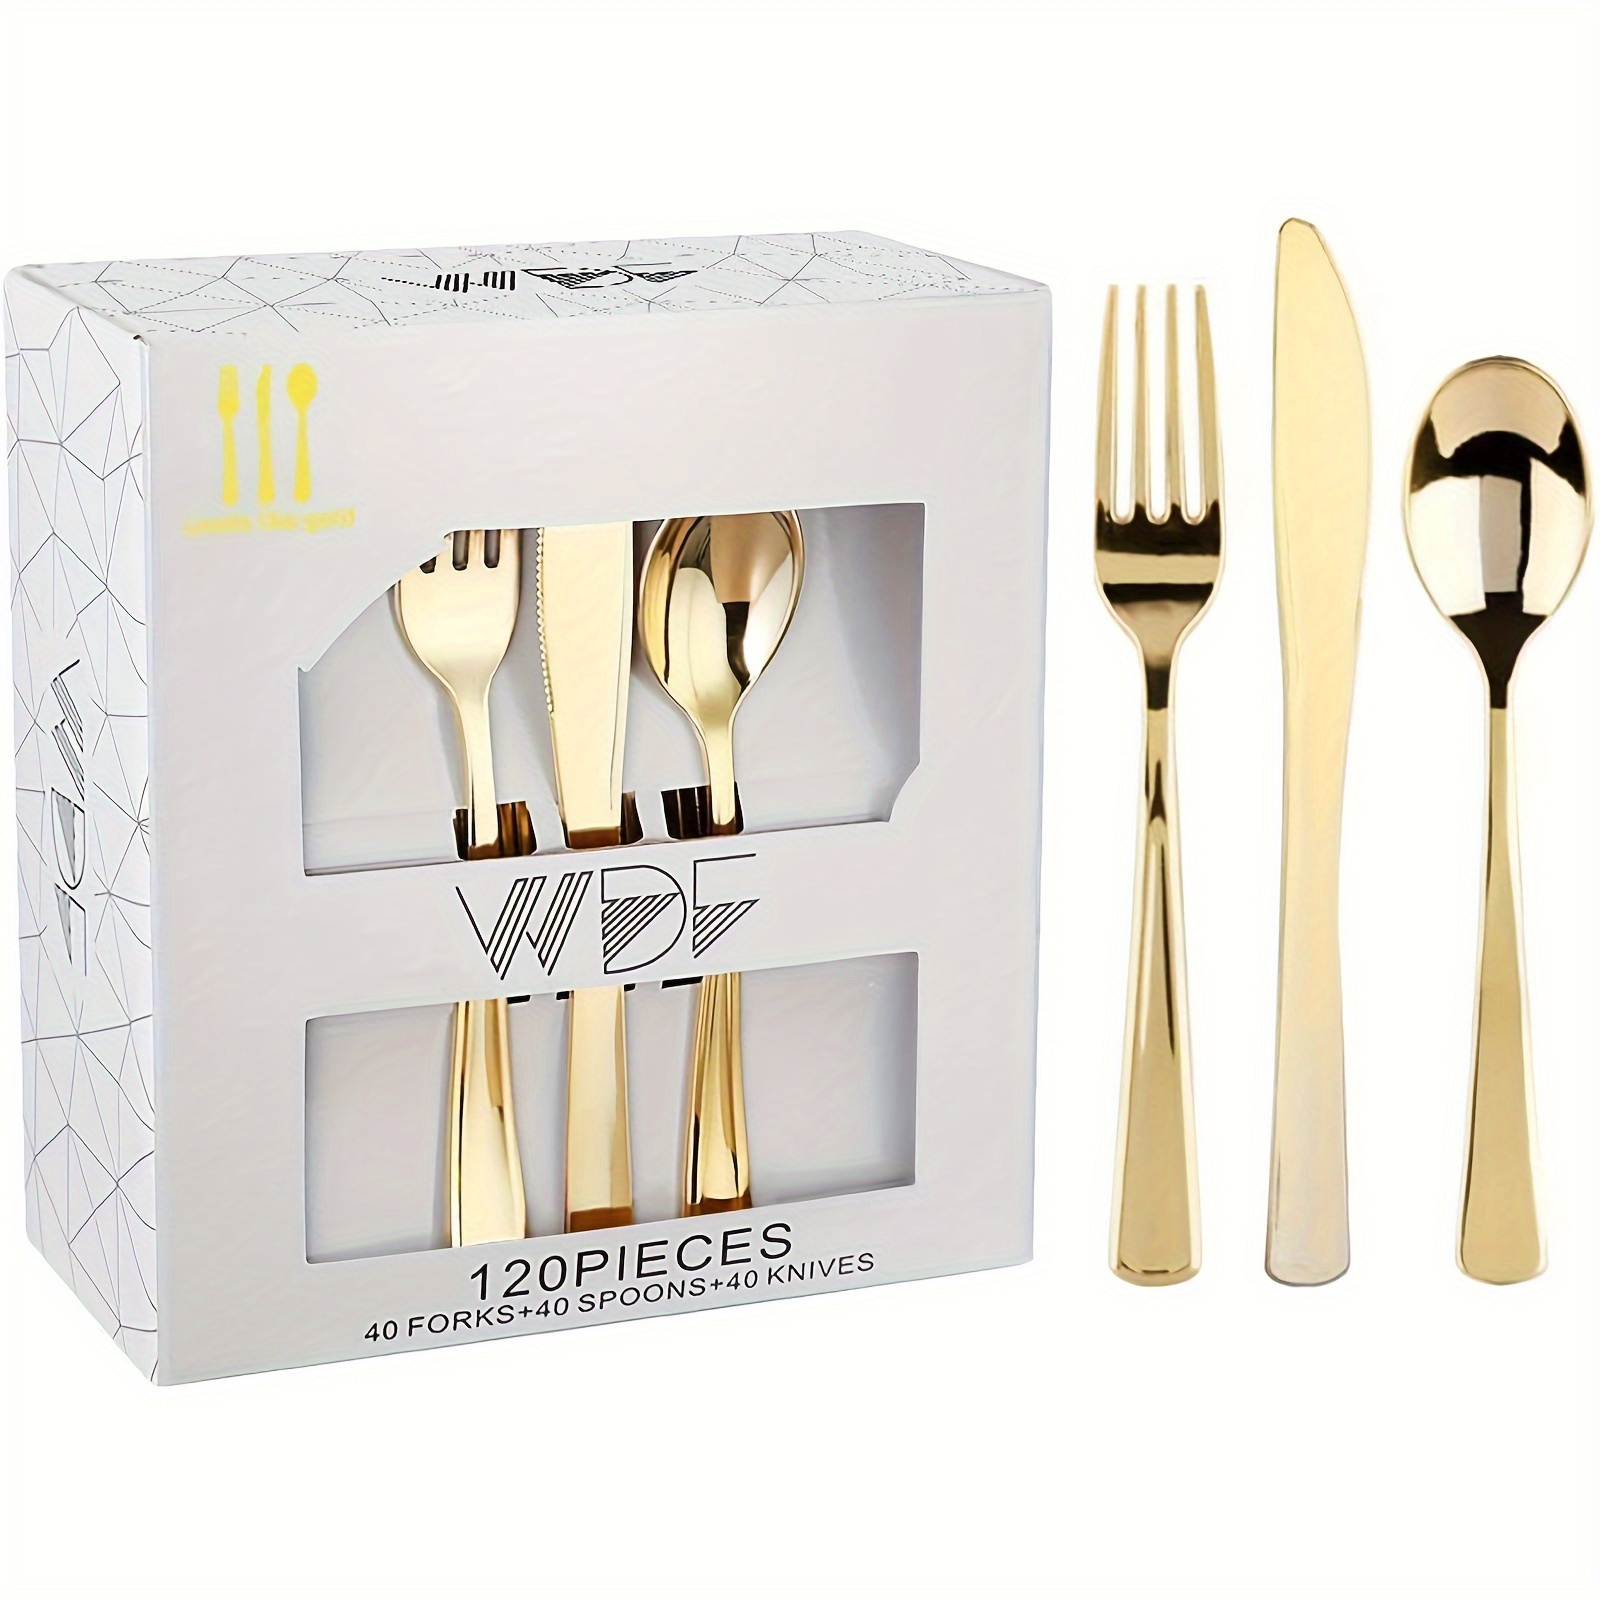 

120 Pieces Gold Plastic Silverware - Disposable Flatware Set - Heavy Duty Plastic Cutlery - Silverware Includes 40 Forks, 40 Spoons, 40 Knives -wdf Plastic Silverware